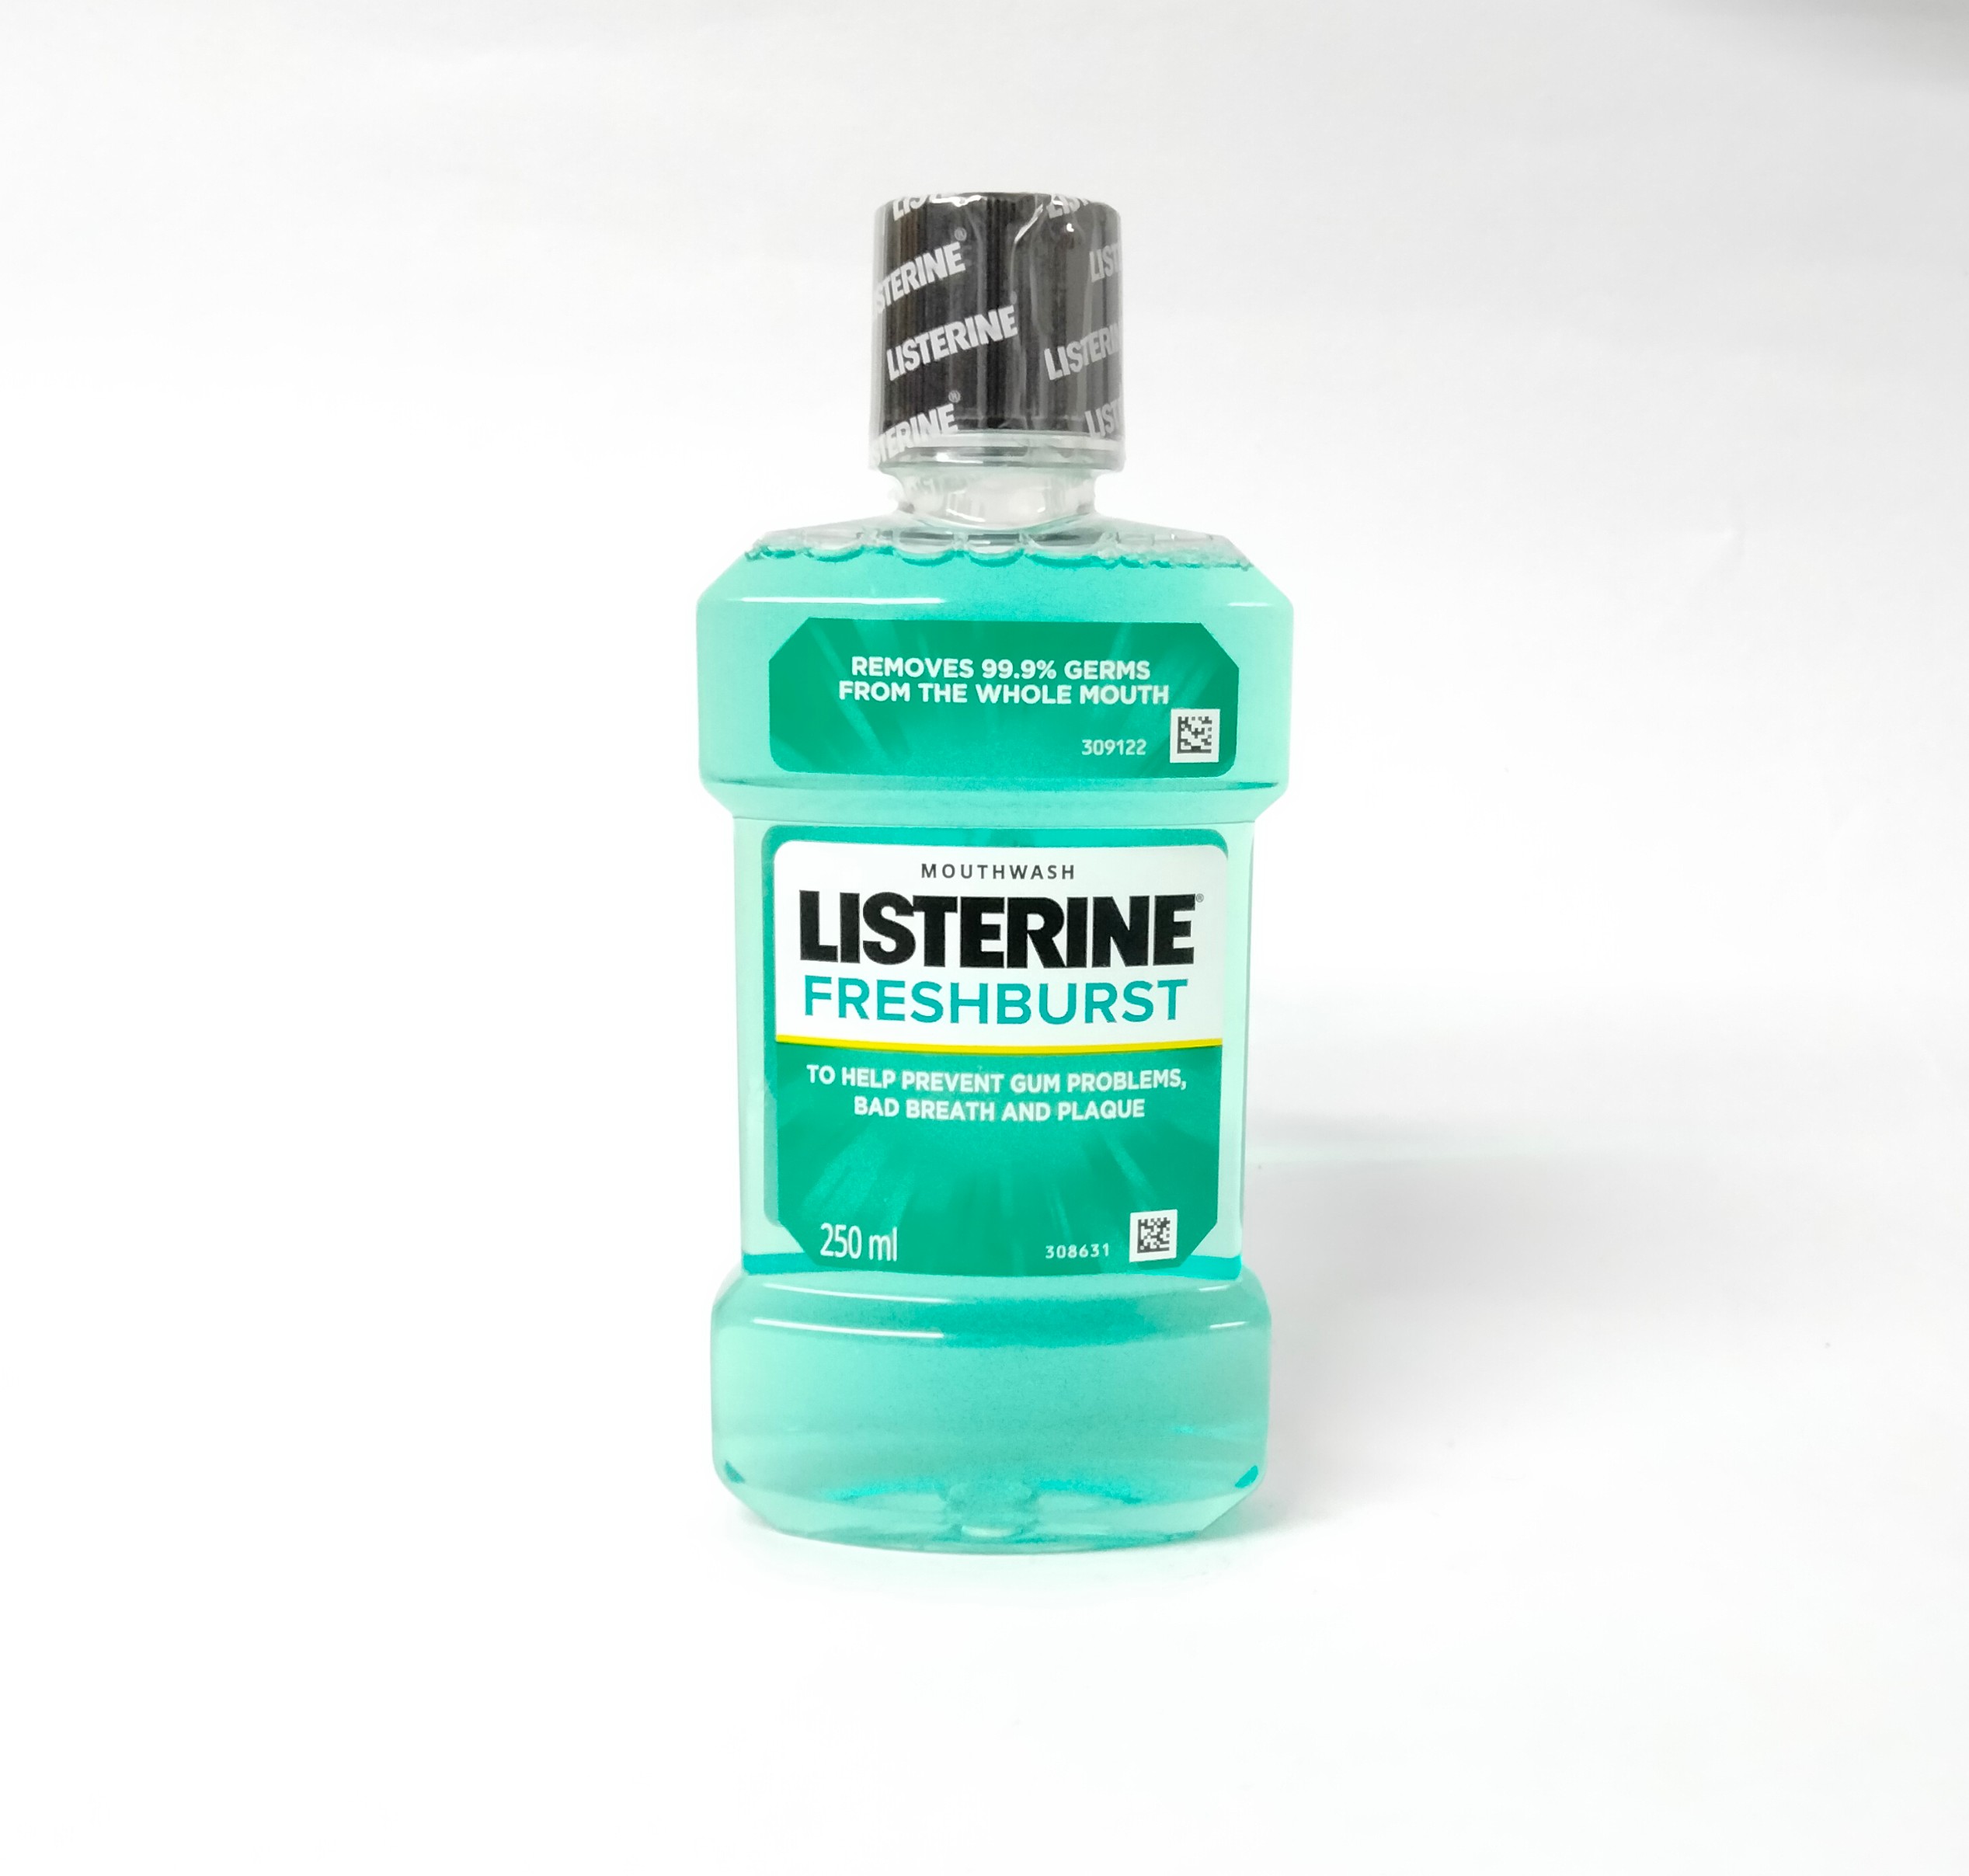 Listerine Freshburst Mouth Wash